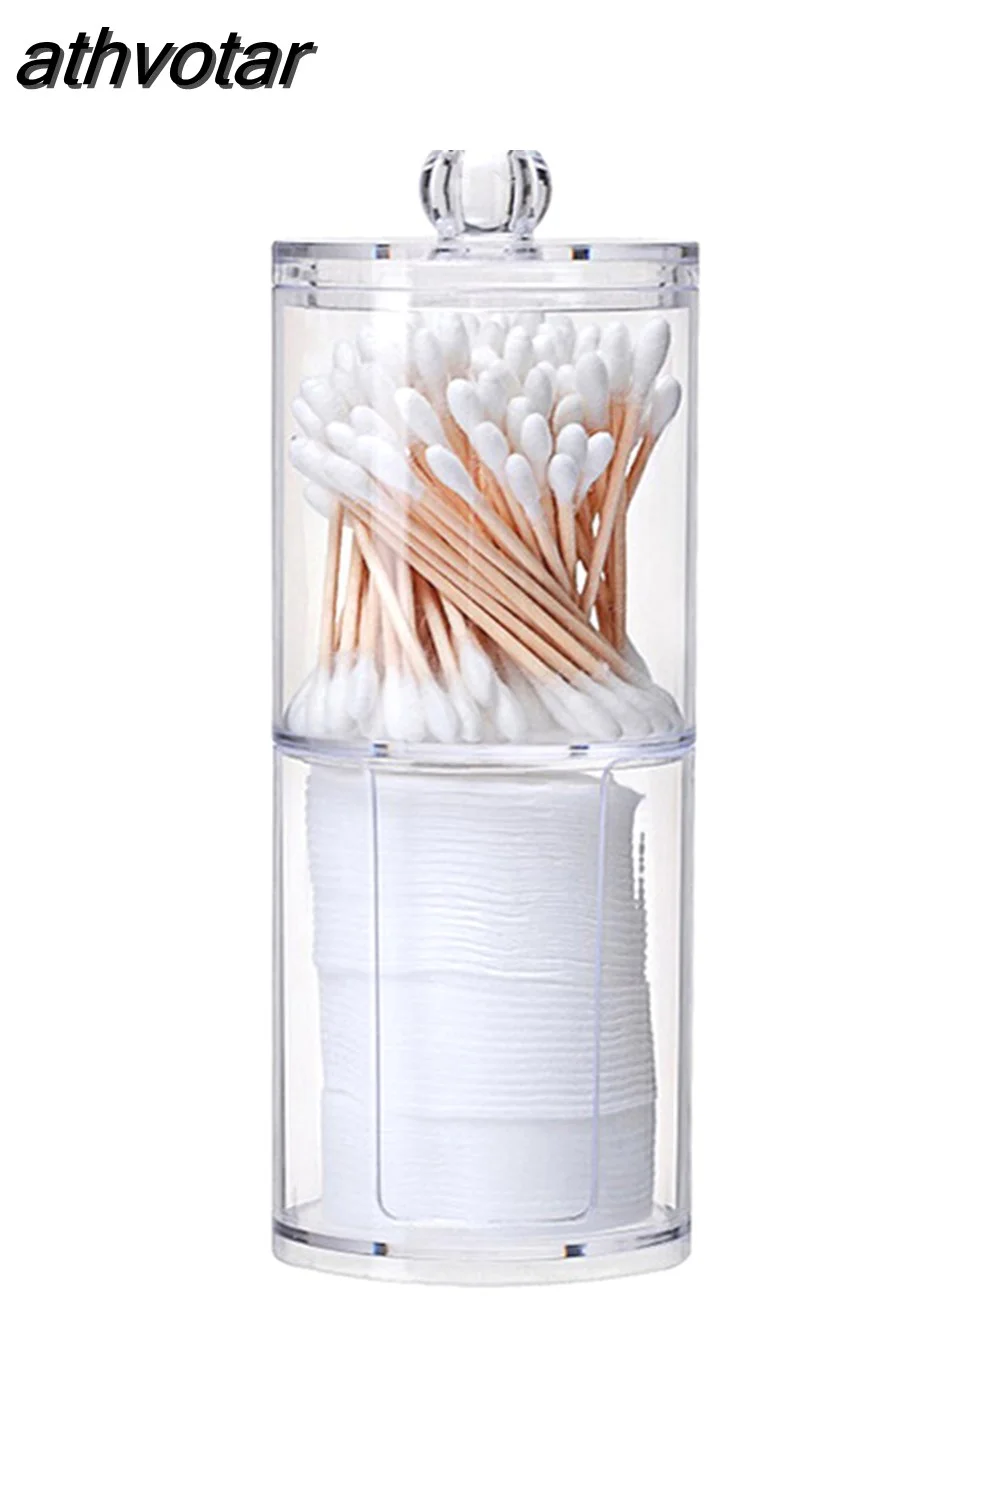 athvotar Makeup Storage Box Cotton Swab Cotton Pad Organizer Brush Plastic Box Lipstick Display Stand Bathroom Accessories